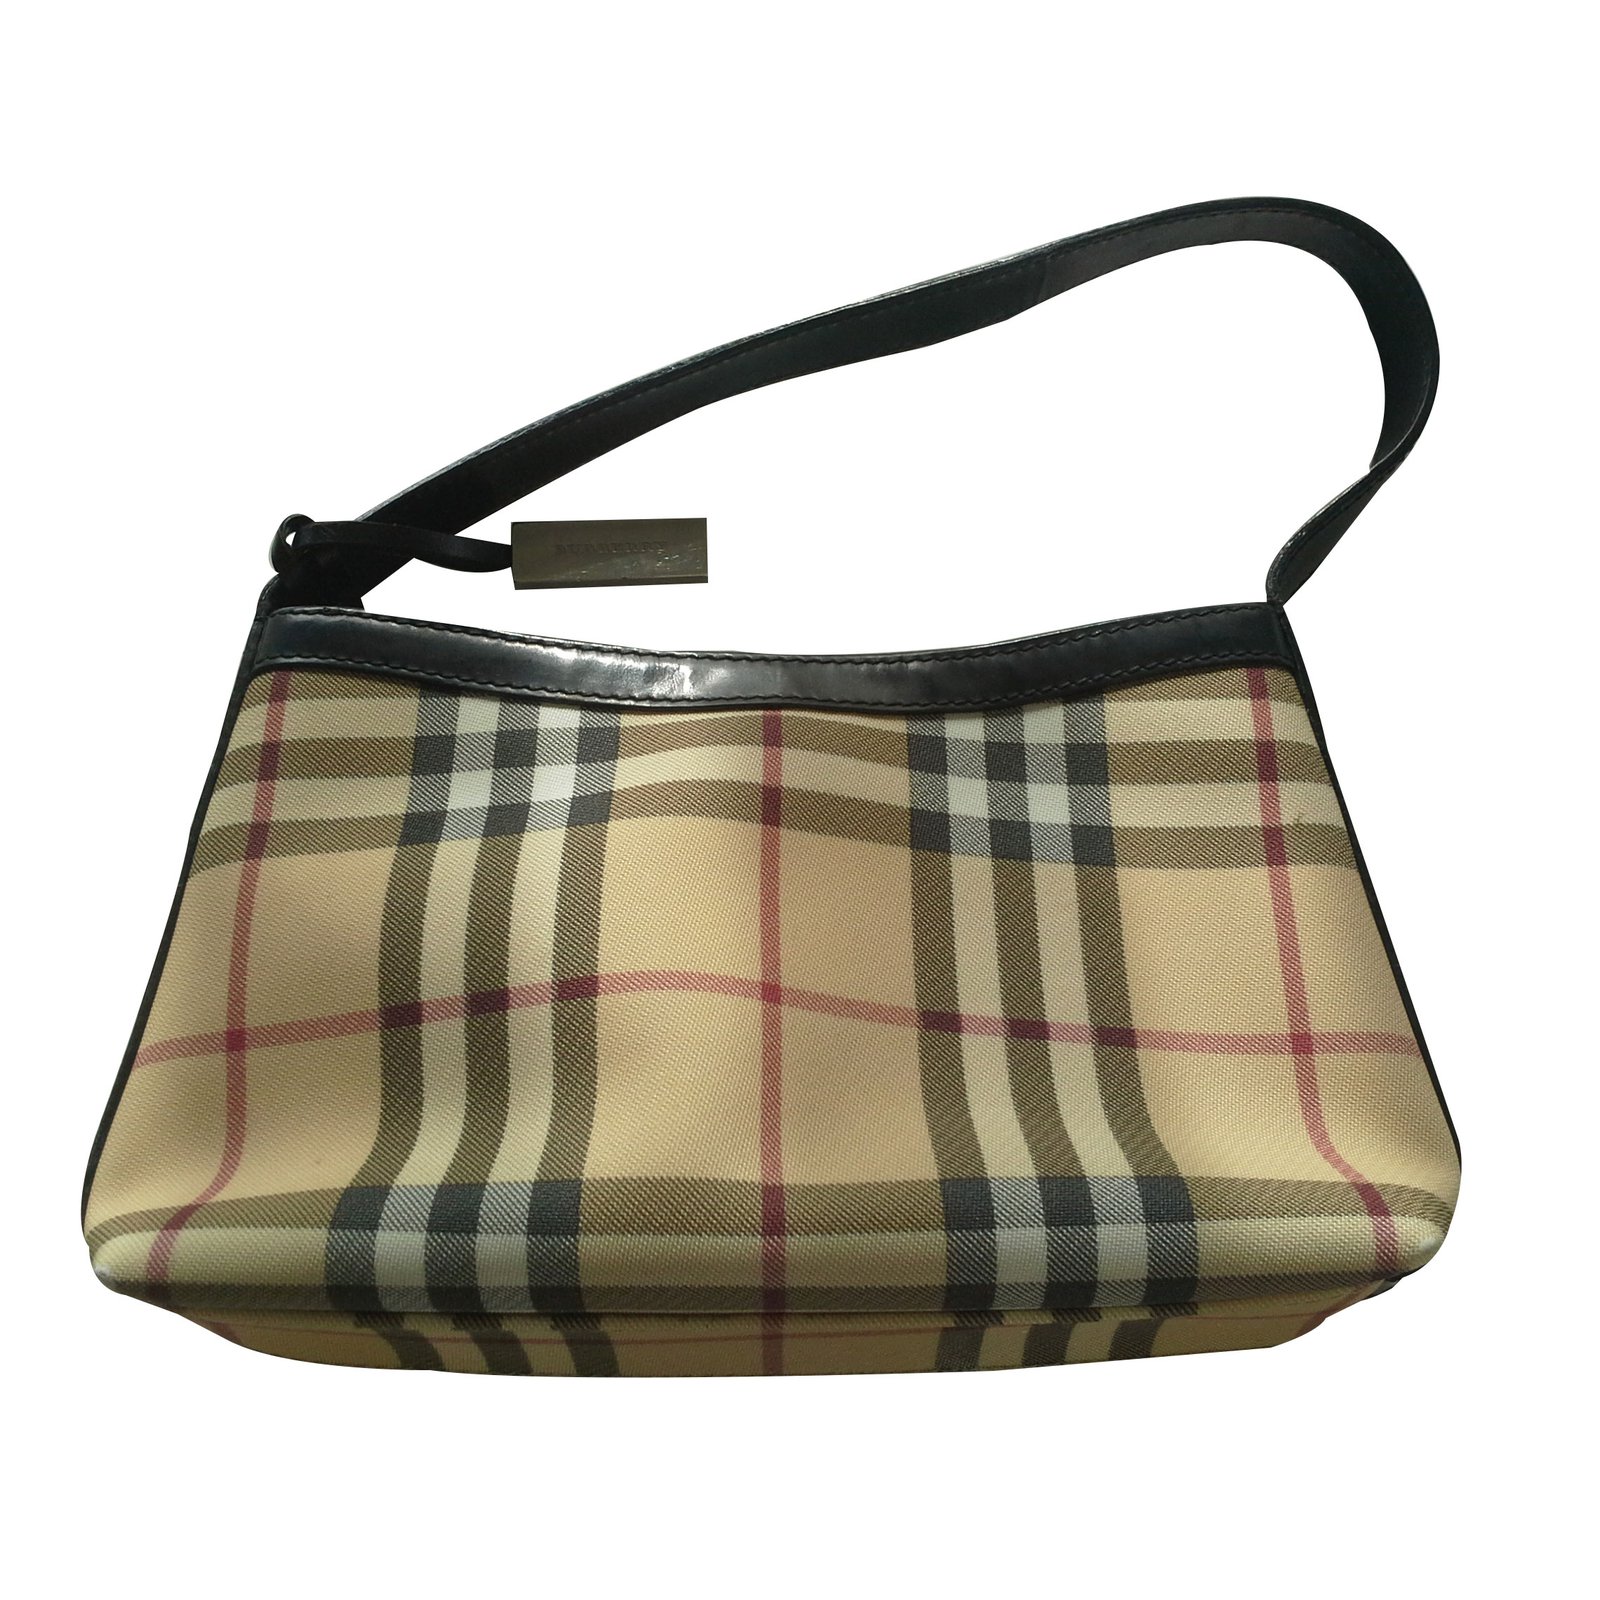 burberry clutch handbags